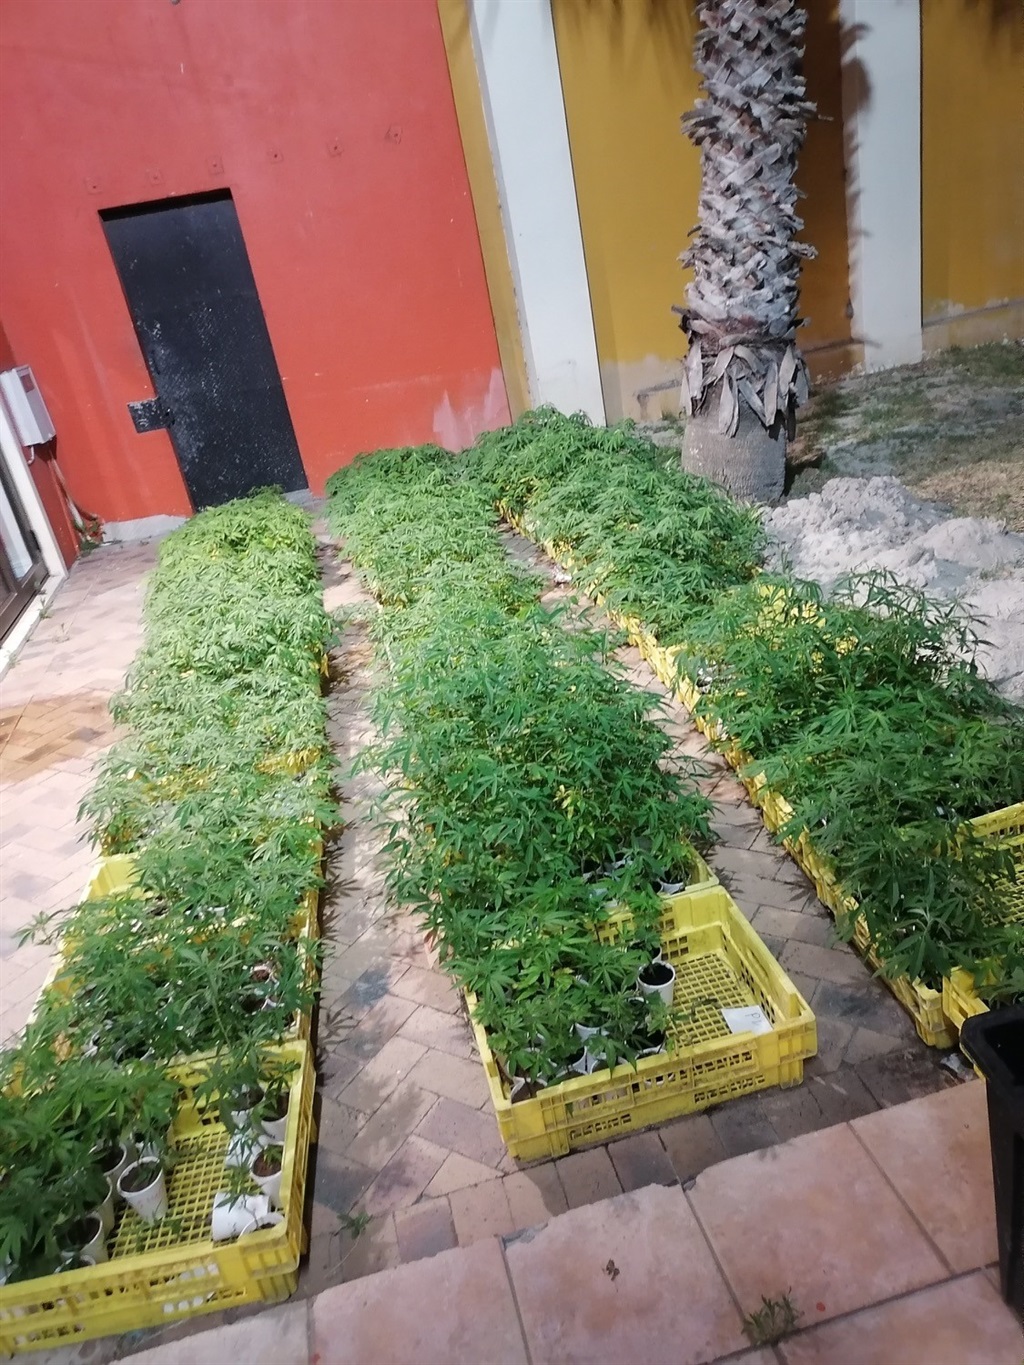 Rows of marijuana plants growing at plantation